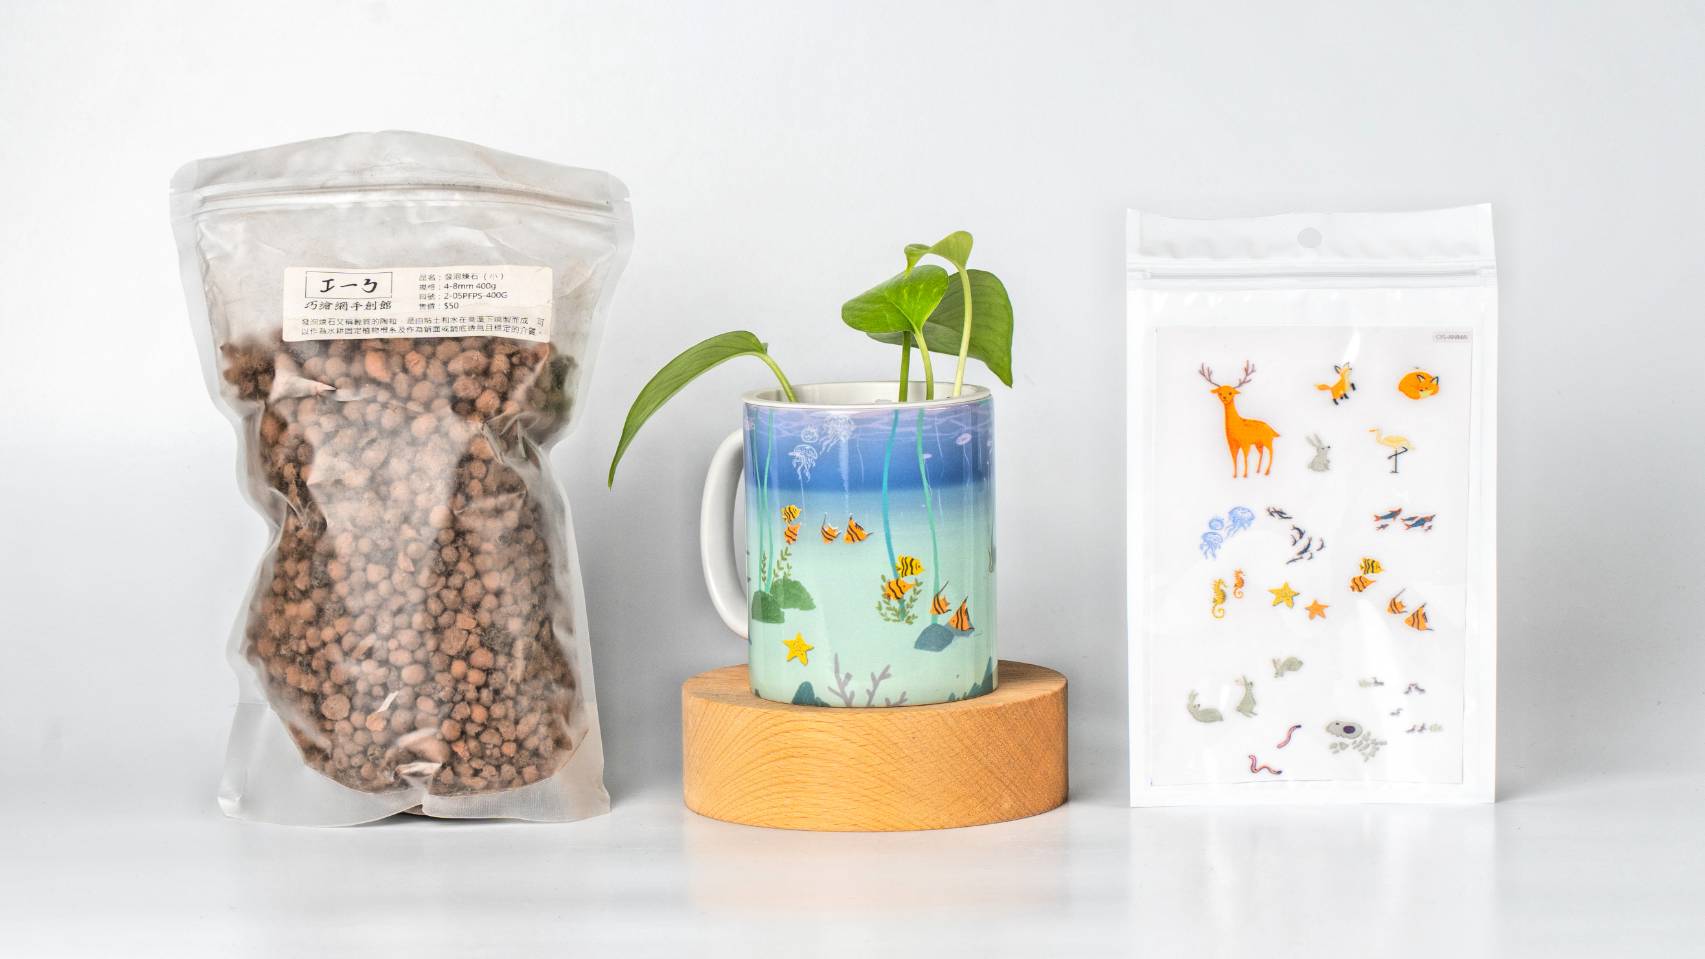 hydroponic plant mug content 15